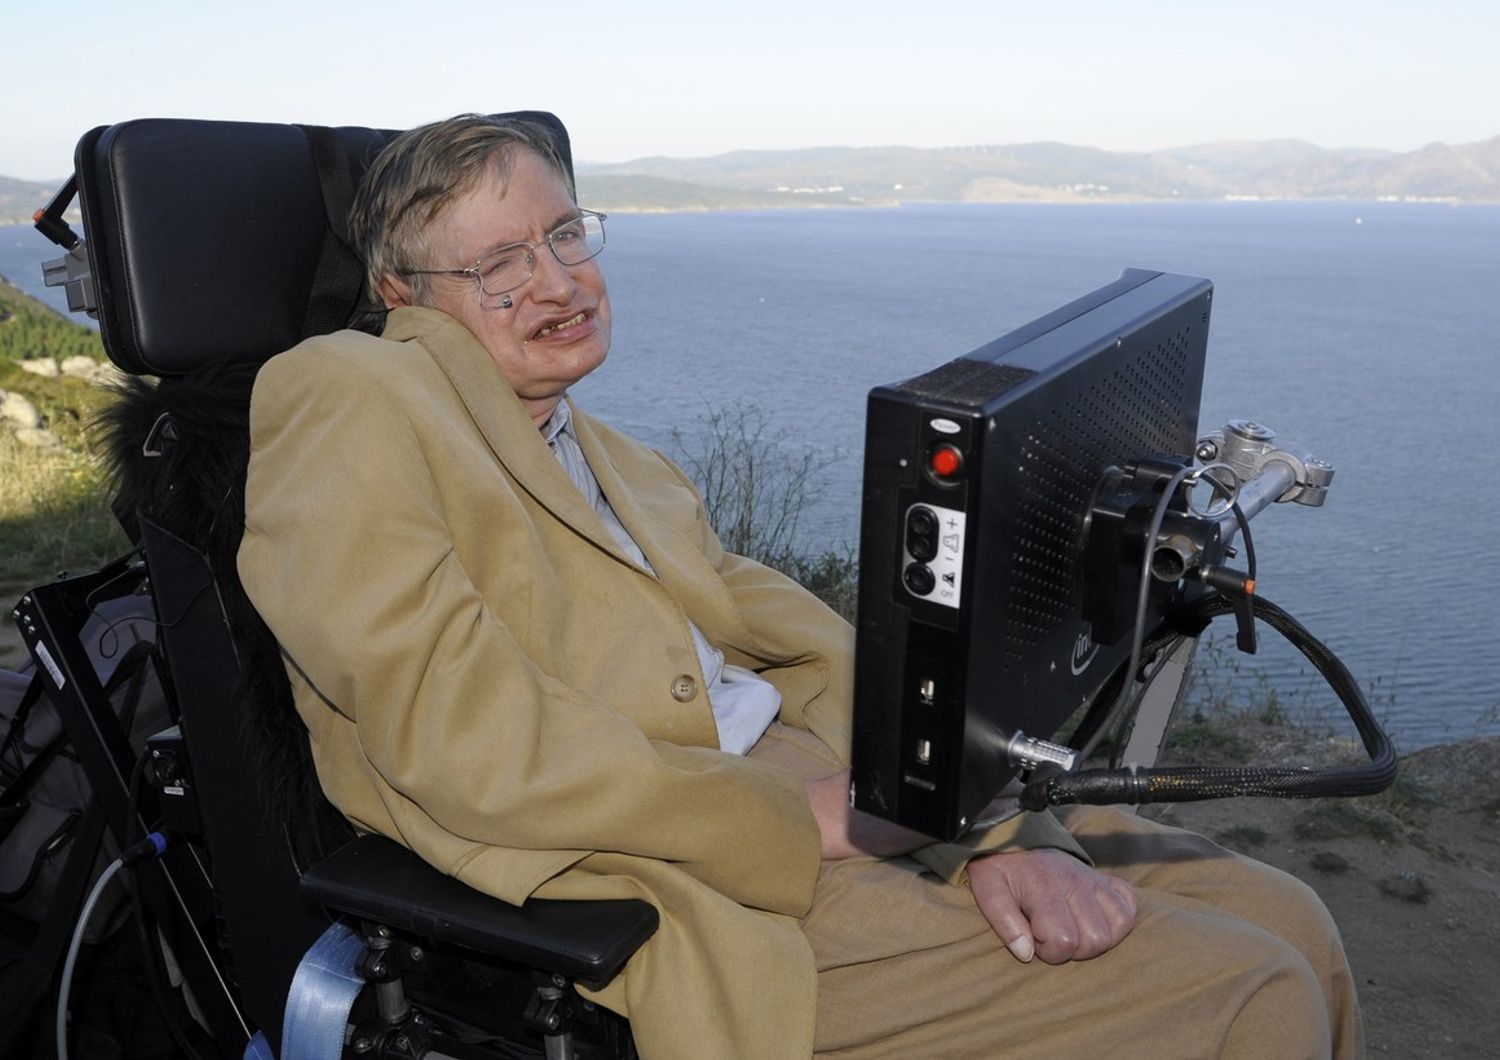 &nbsp;Stephen Hawking